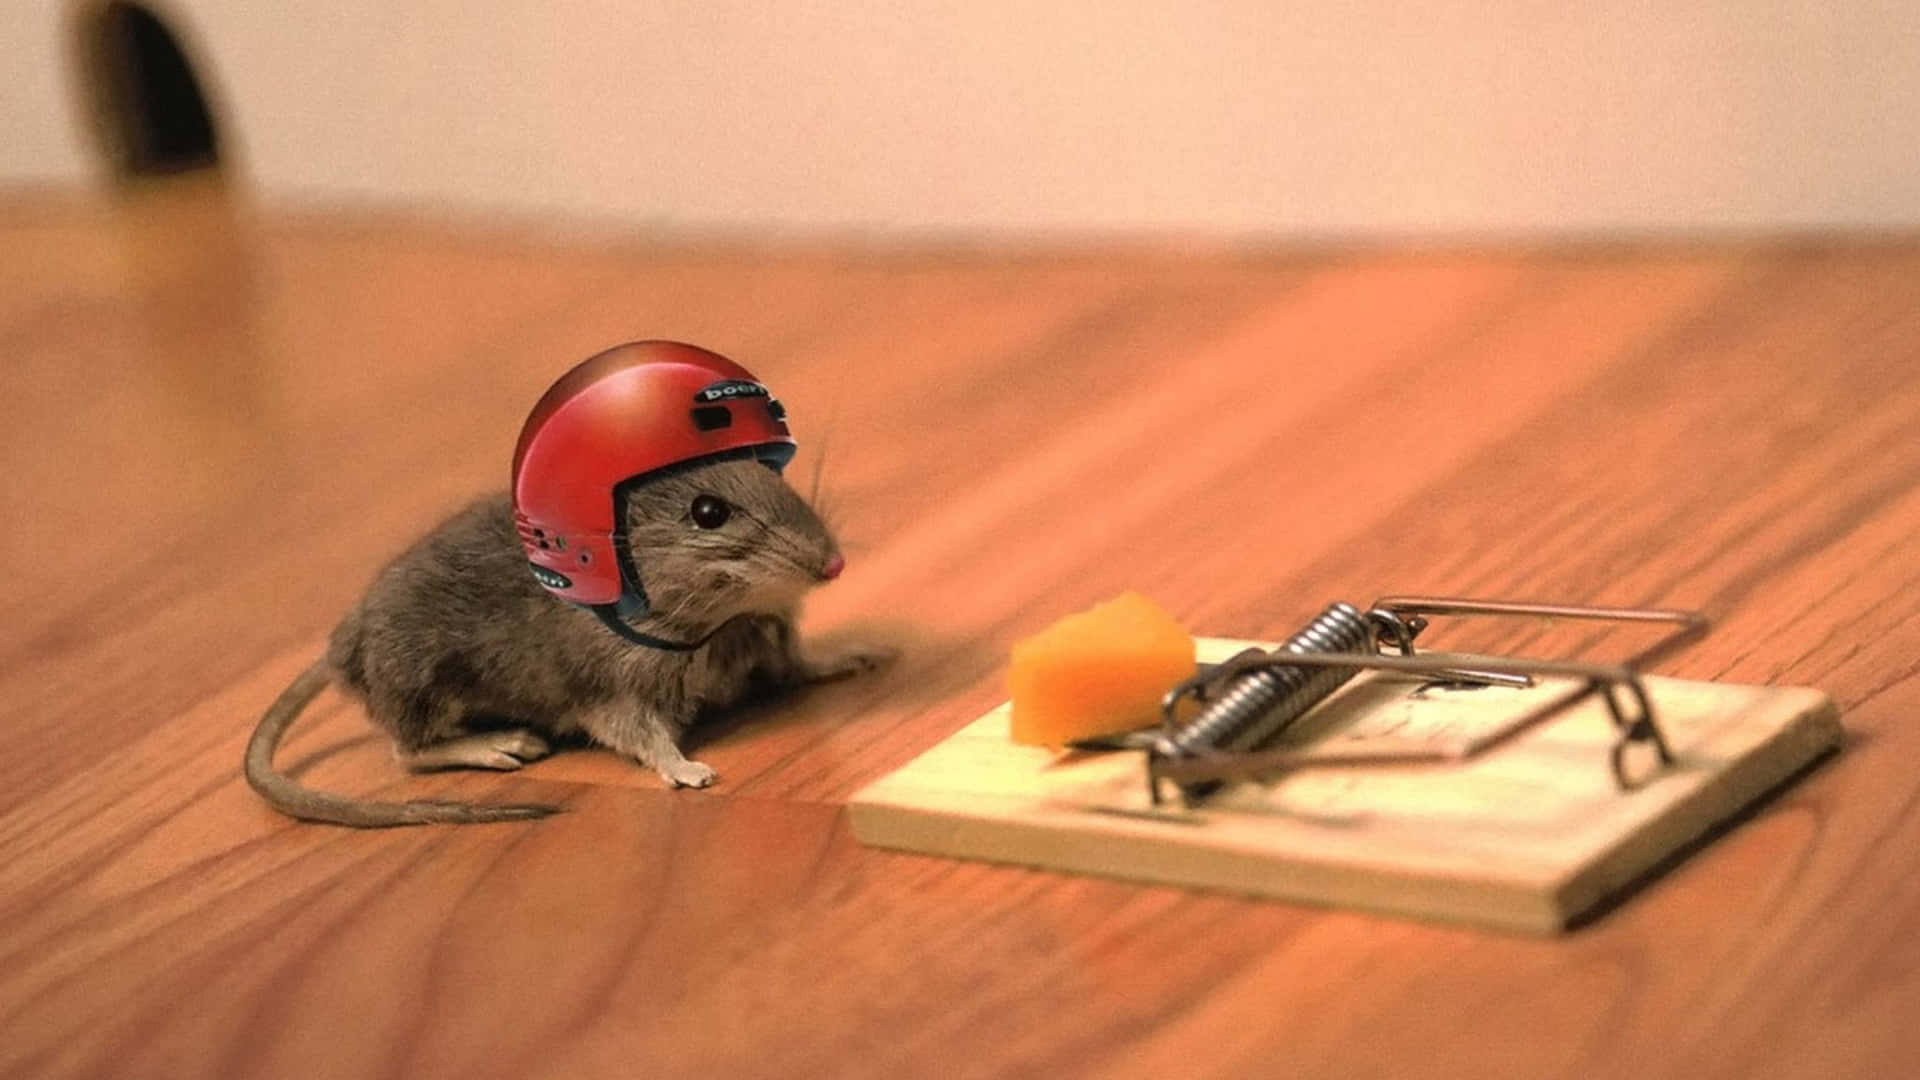 Cautious Mouse With Helmet Near Mousetrap.jpg Wallpaper